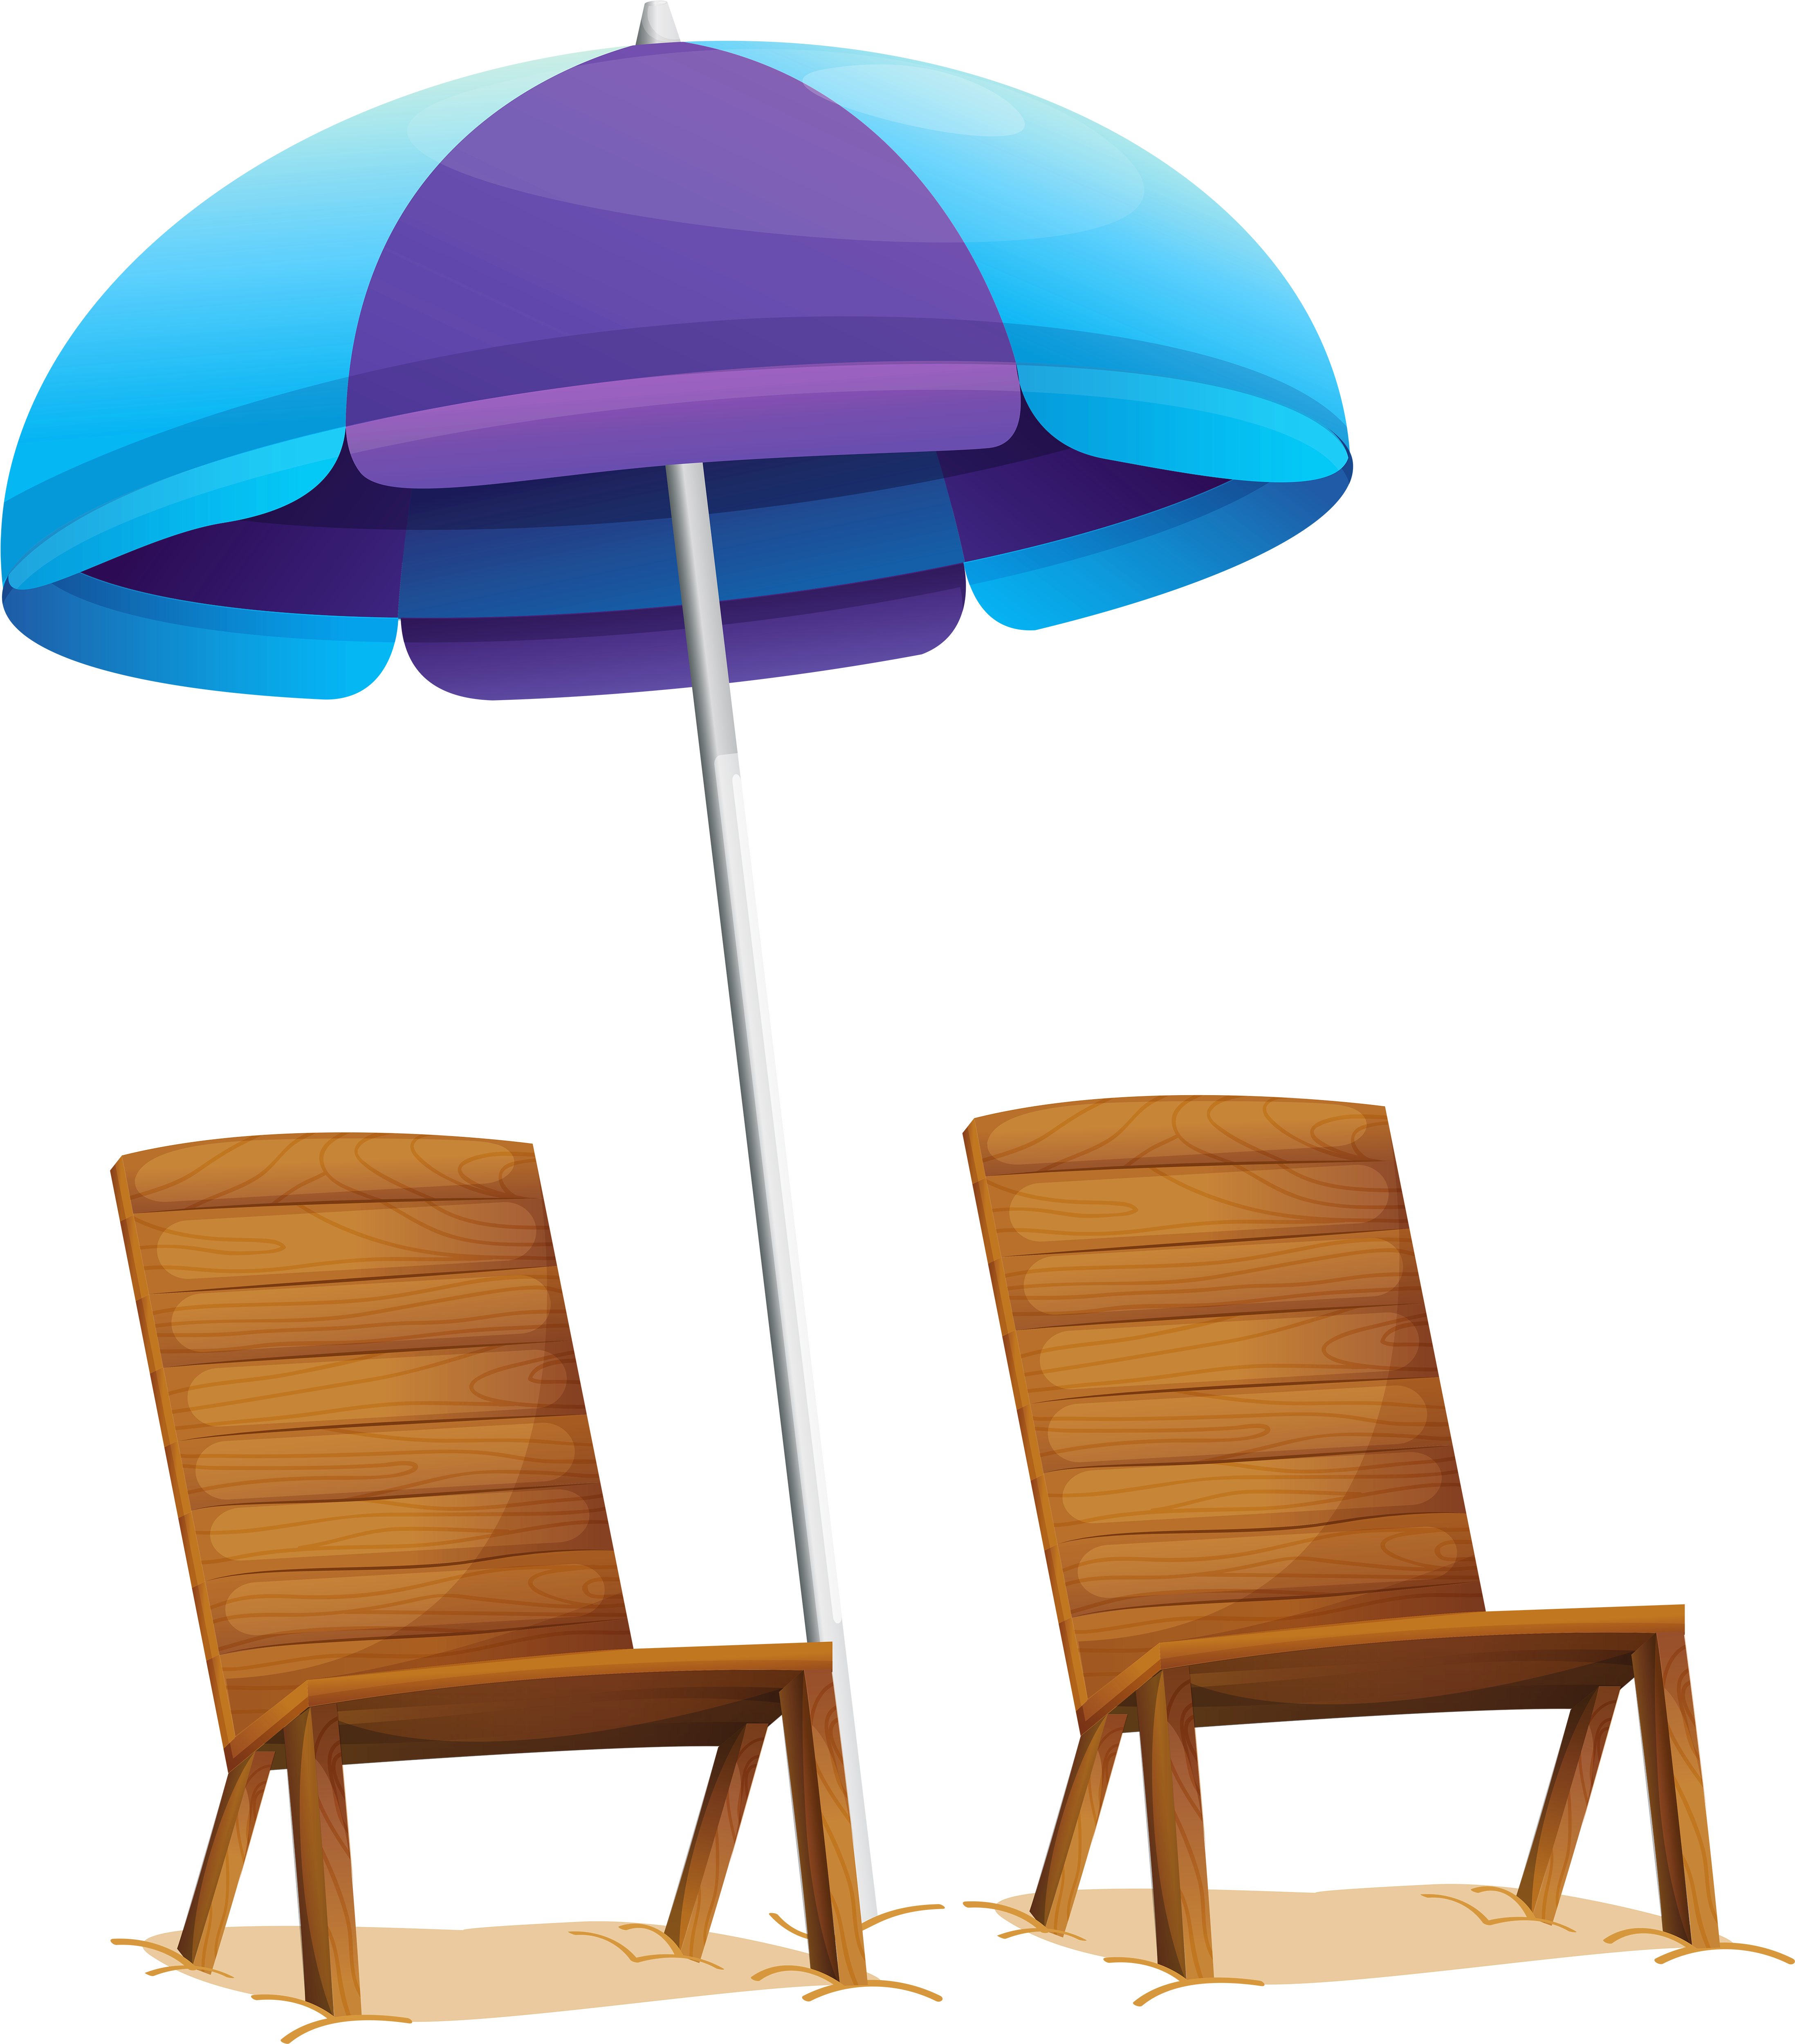 Umbrella Chair Cliparts Free Download Clip Art Portable.